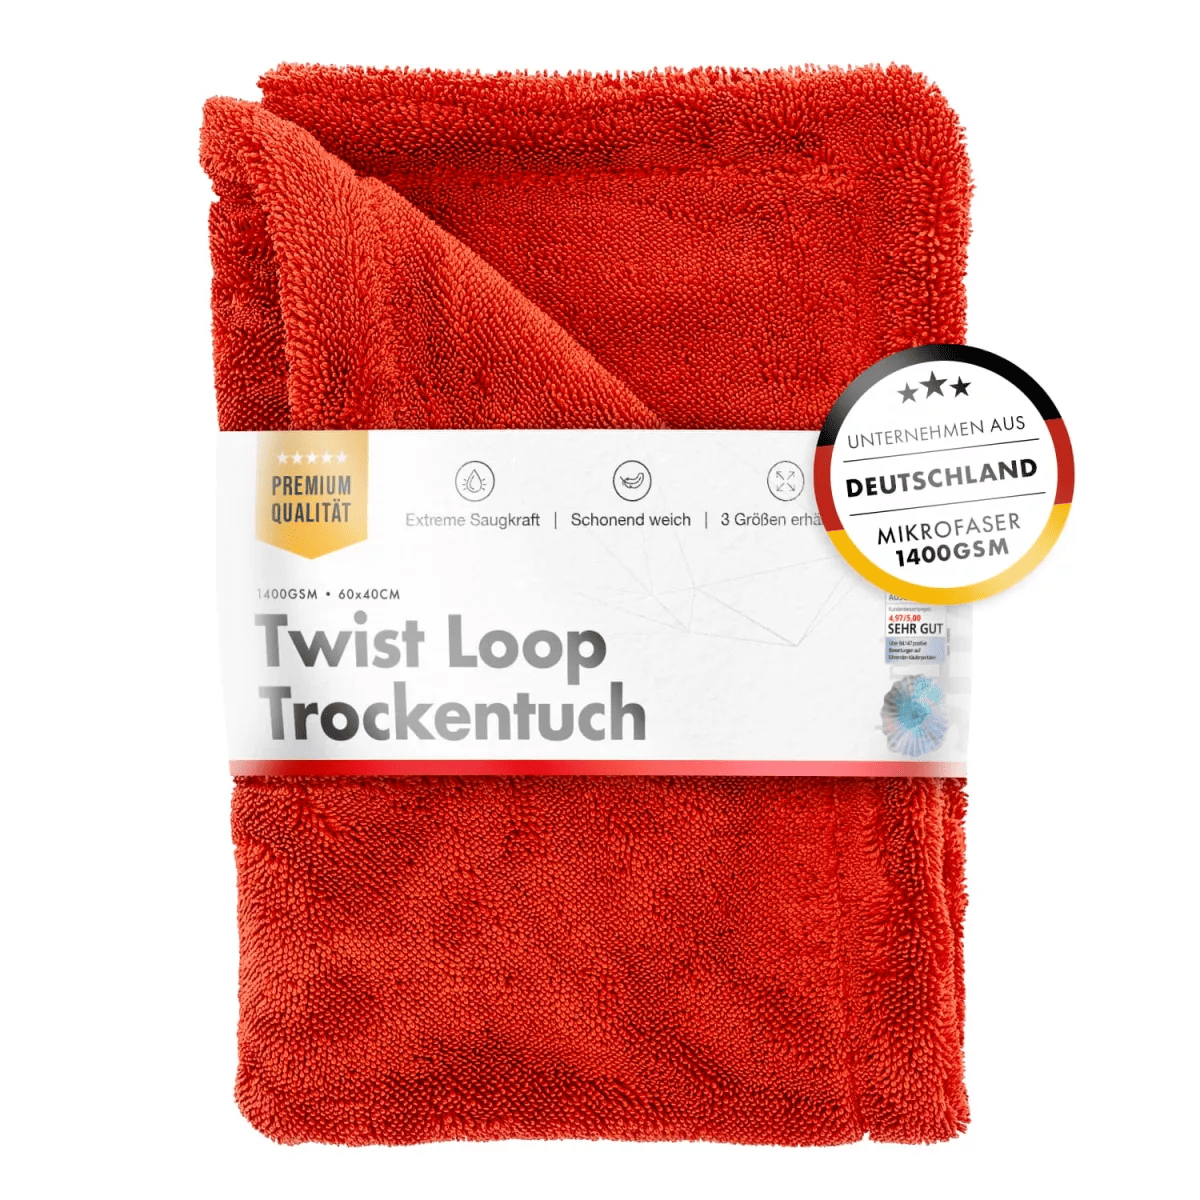 chemicalworkz Shark Twisted Loop Towel 1400GSM Rot Trockentuch 60x40cm